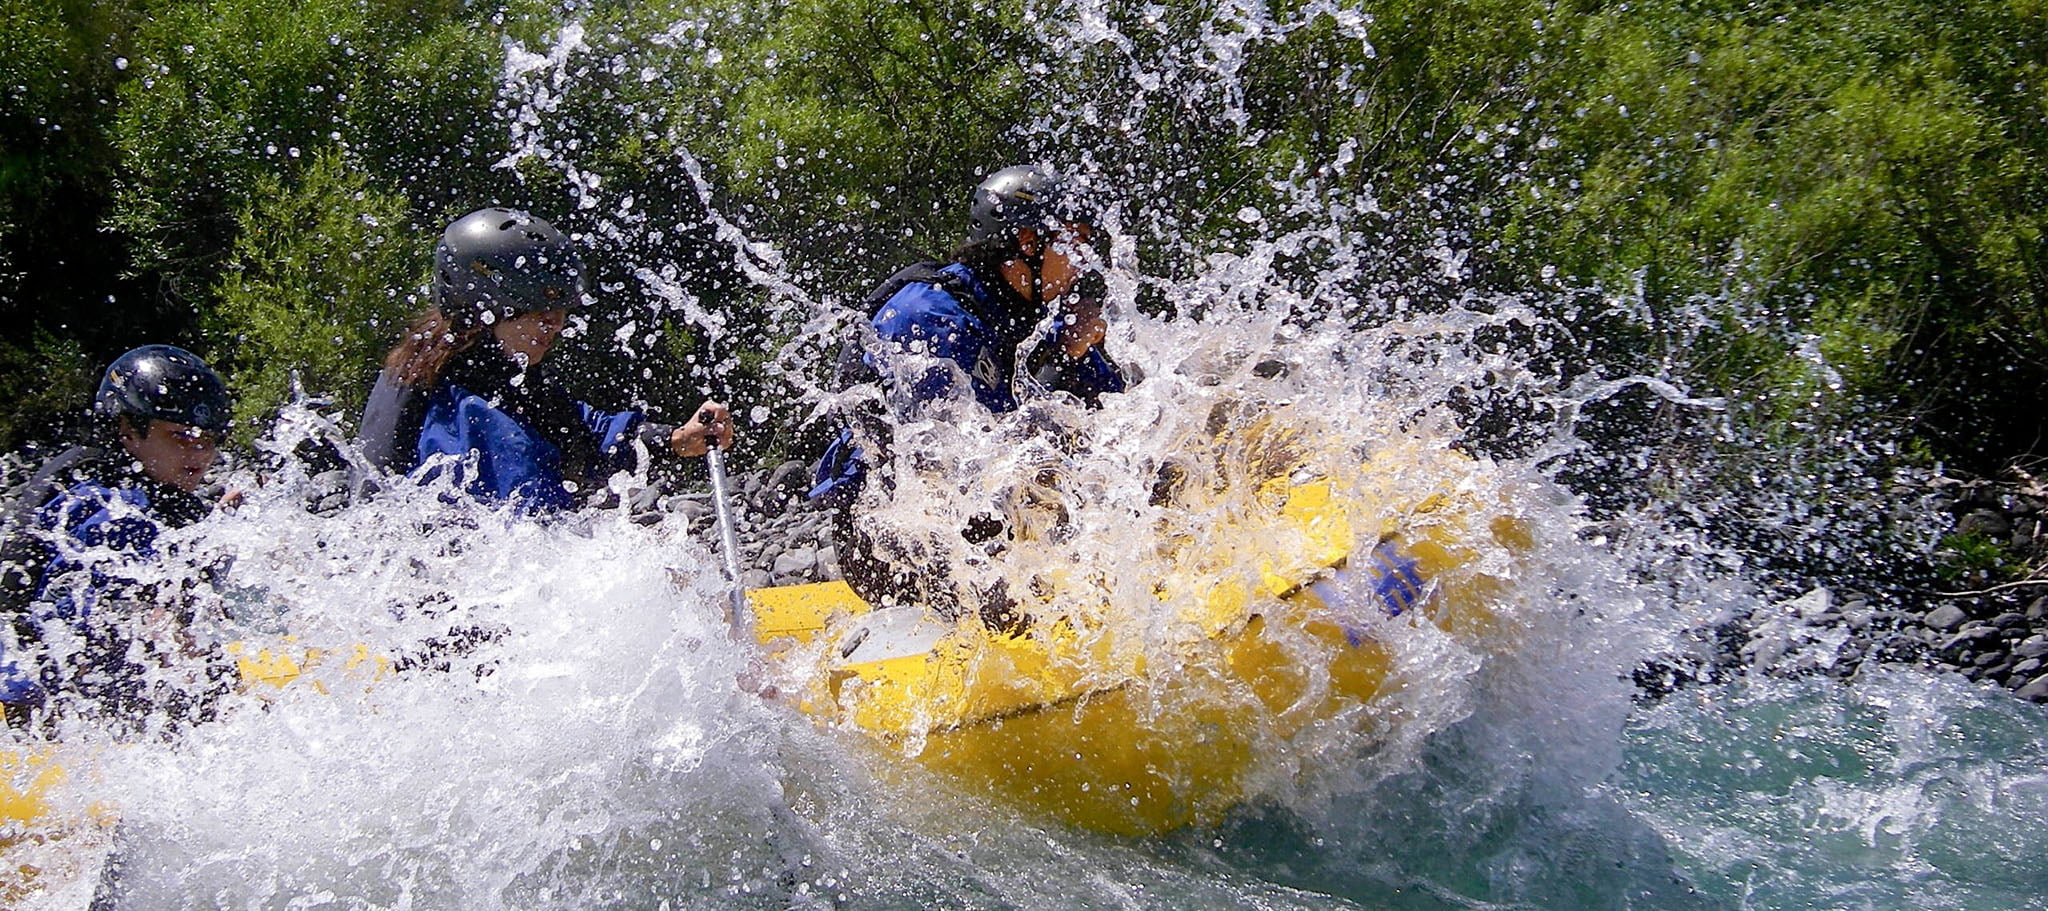 River Rafting In Nepal